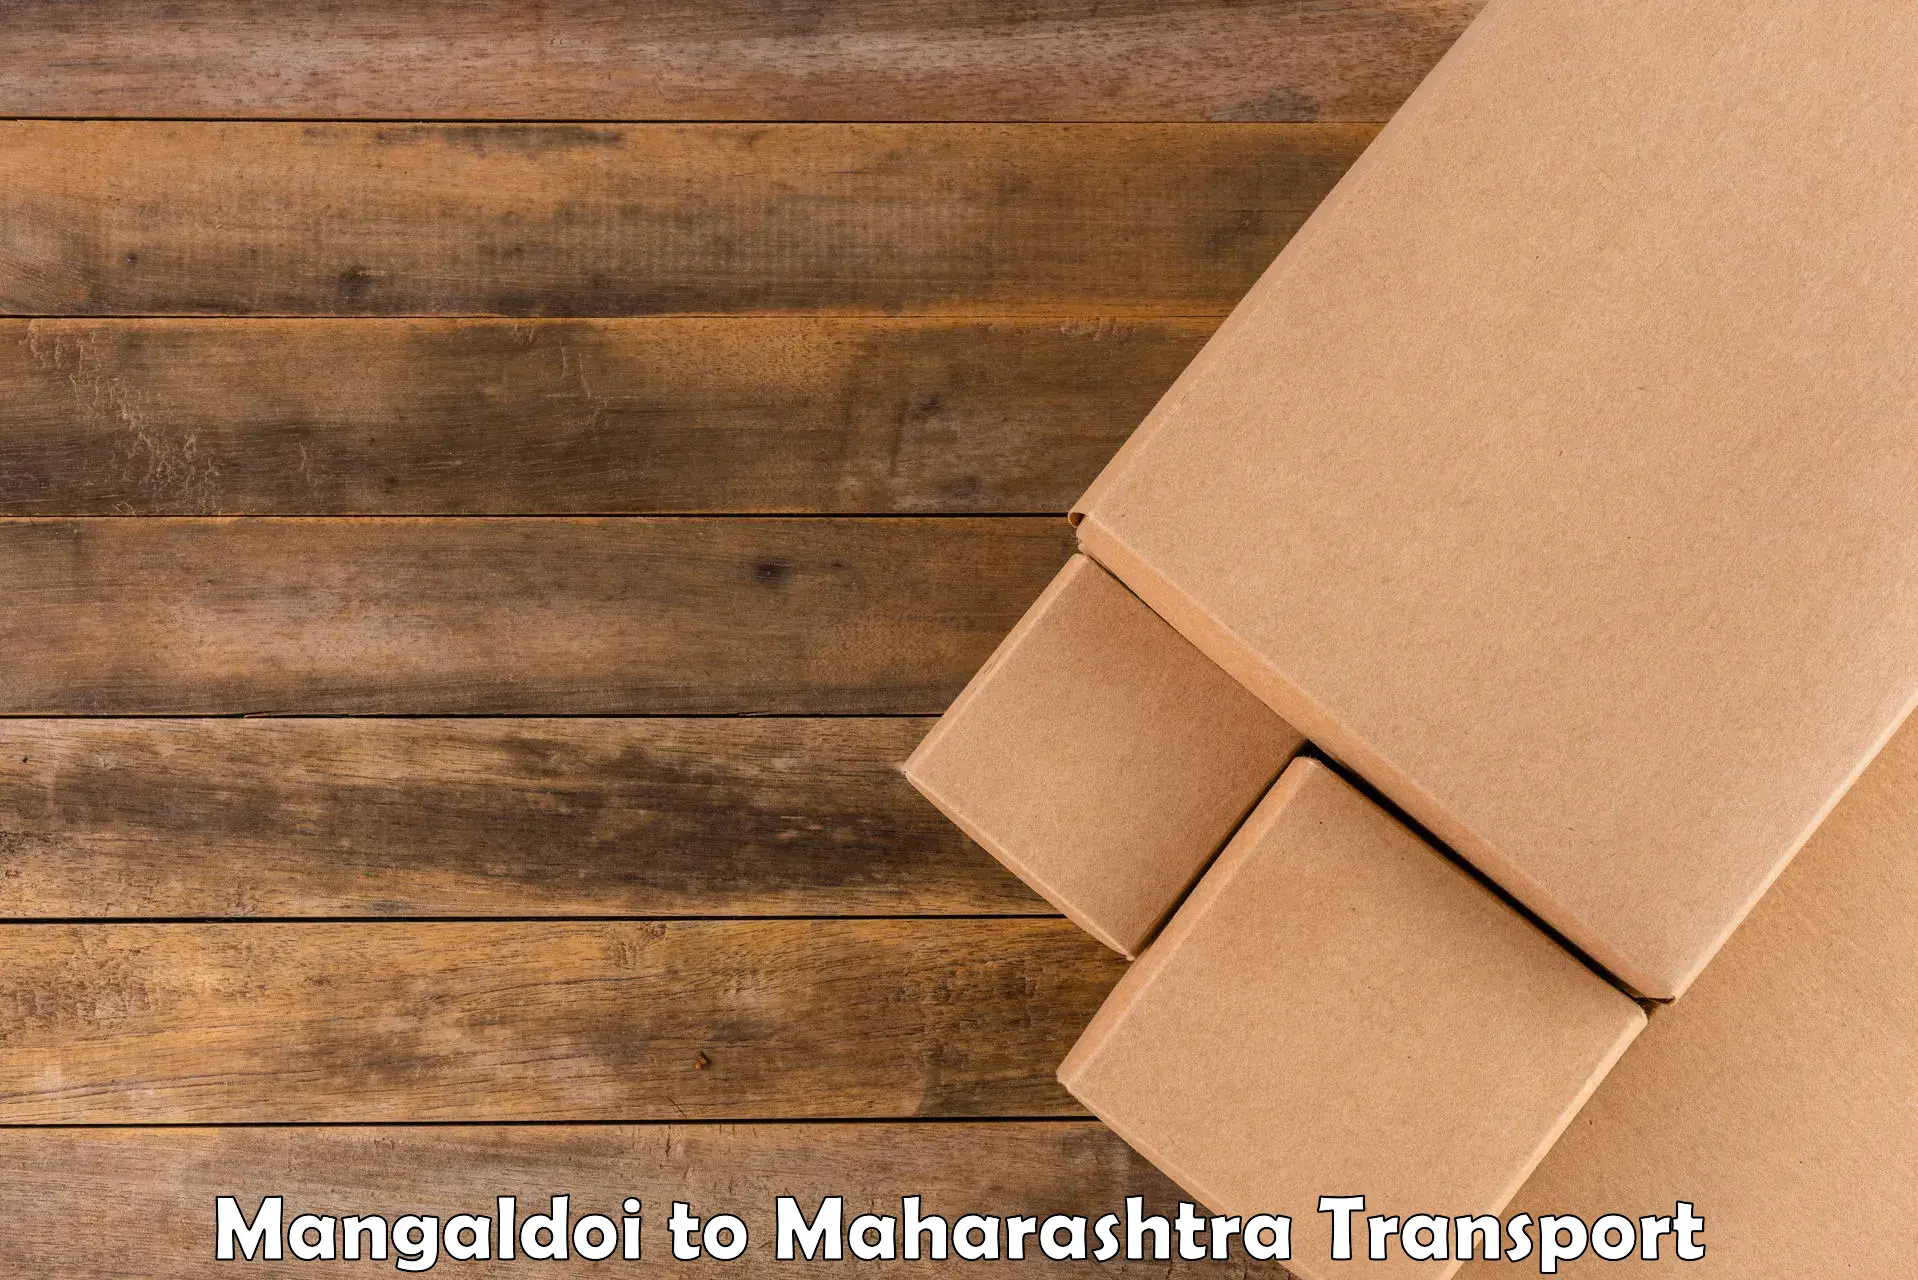 Cargo train transport services in Mangaldoi to Karjat